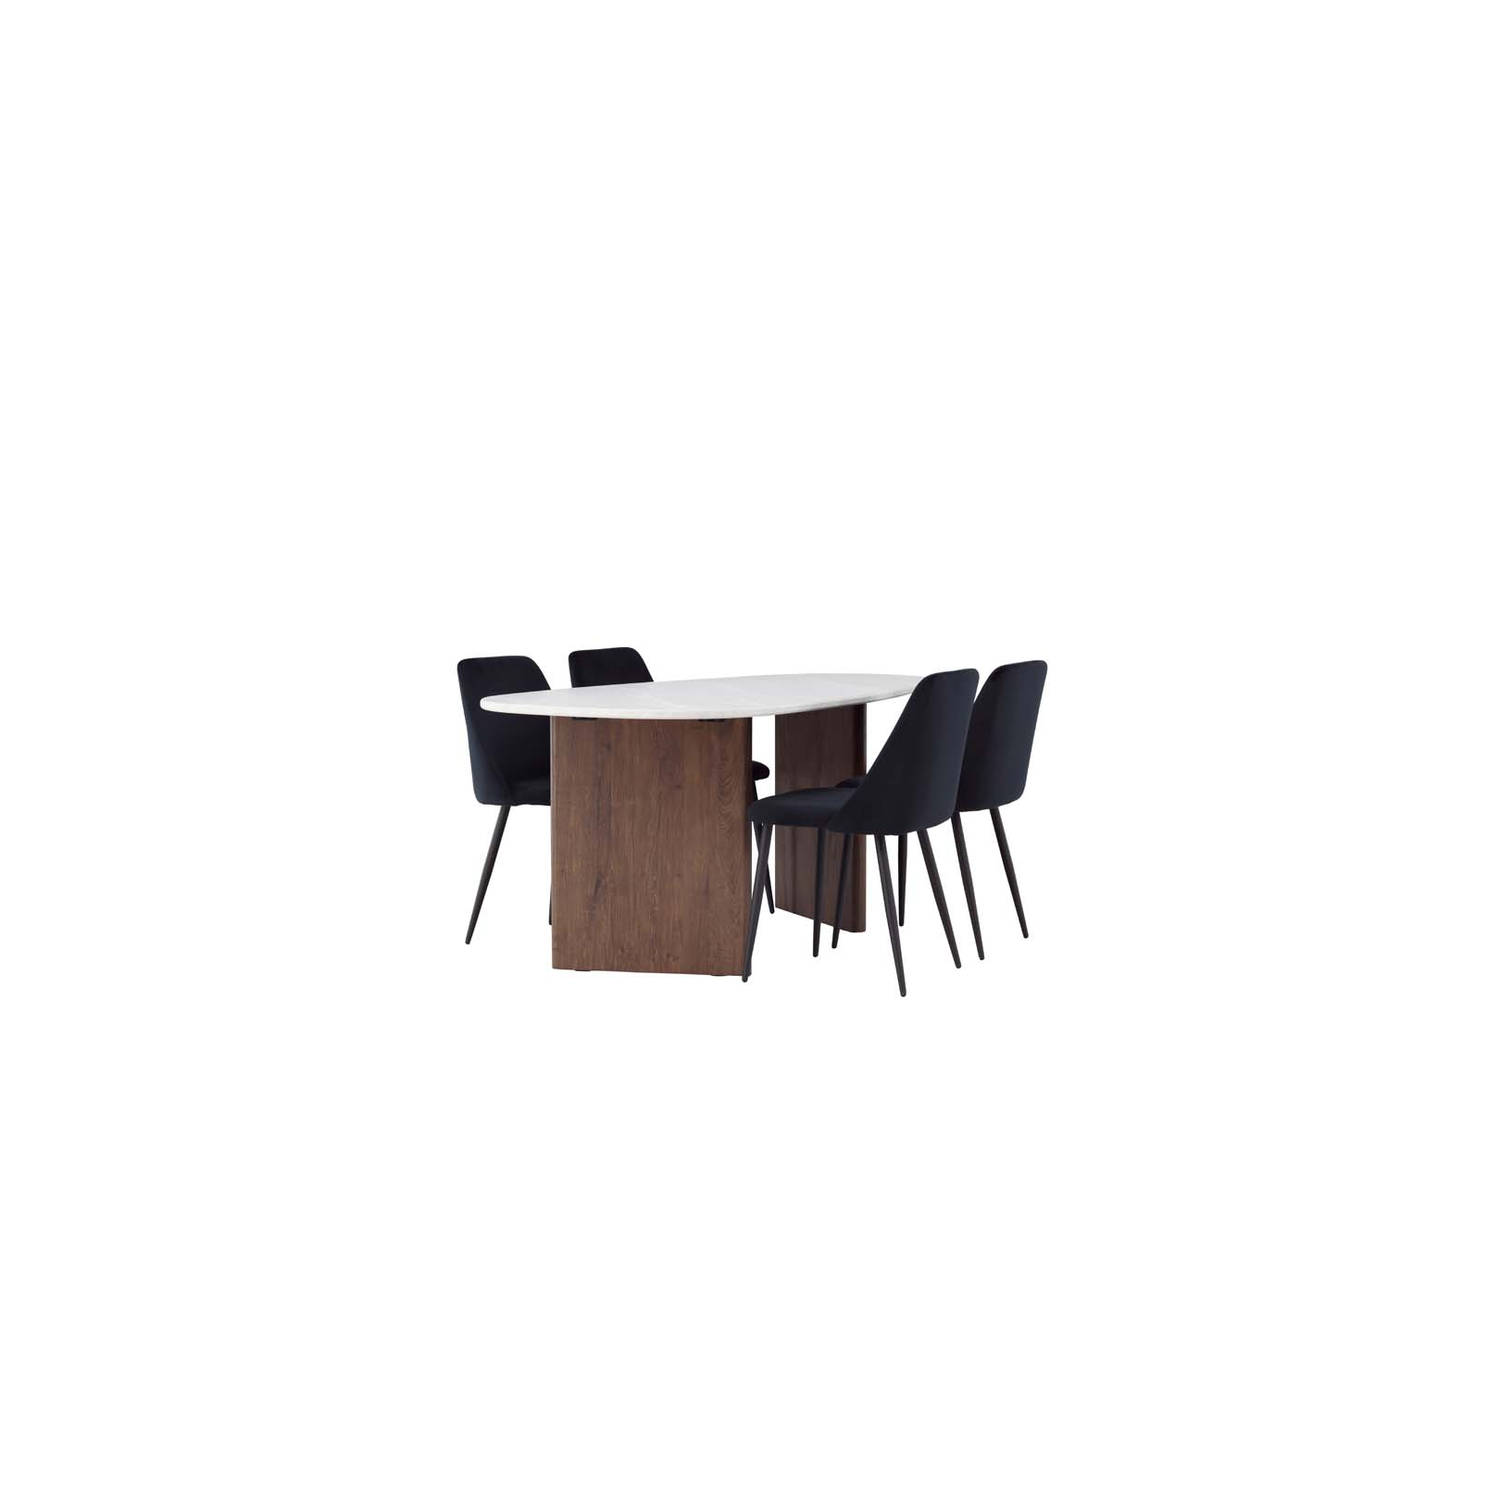 Grönvik eethoek tafel offwhite en 4 Night stoelen zwart.